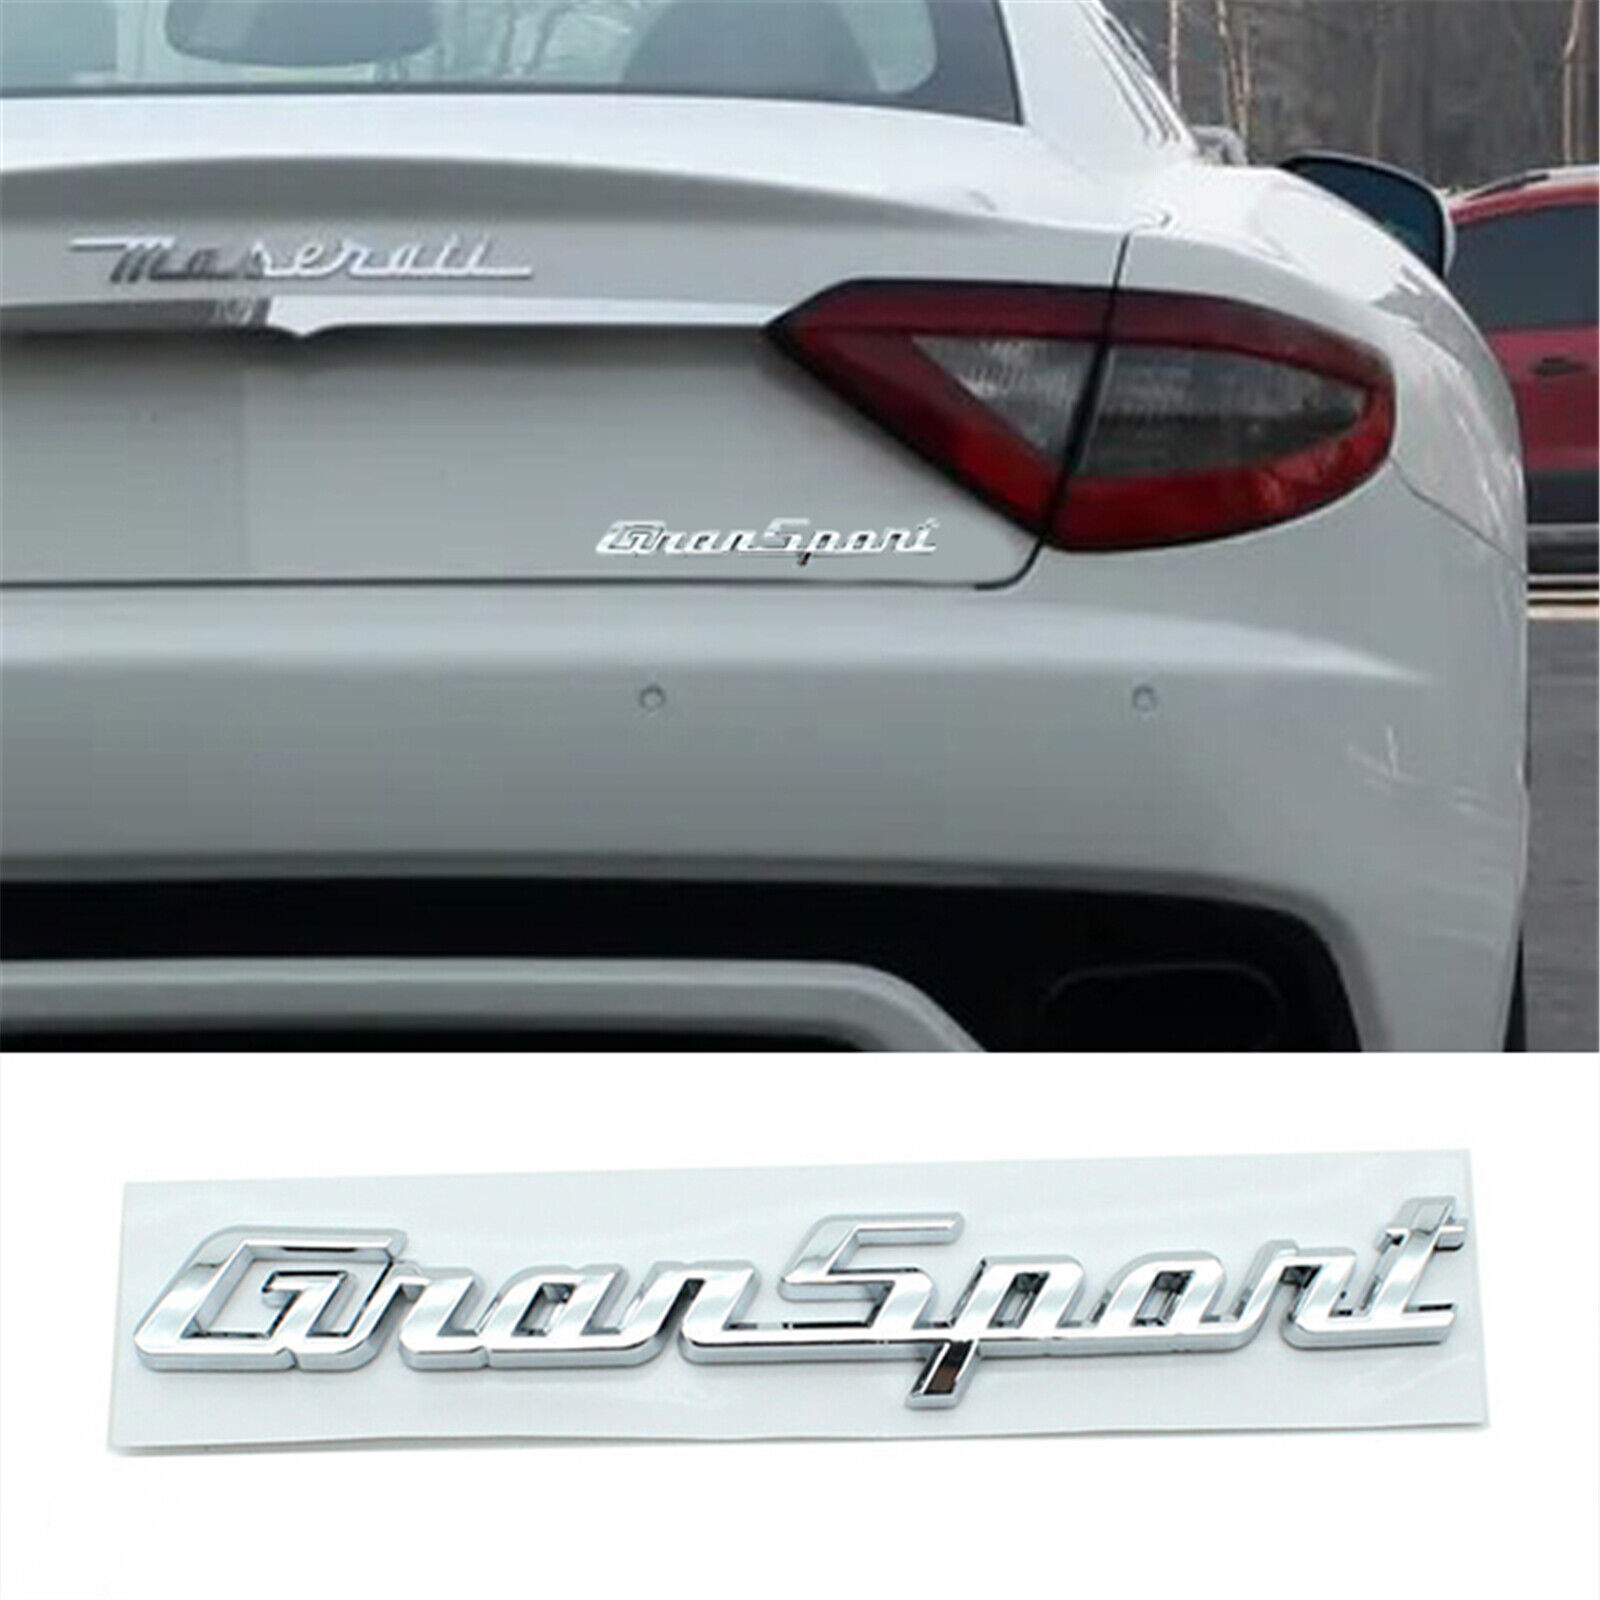 For Maserati Gransport silver Rear Badge Emblem Look Deck lid Trunk decal